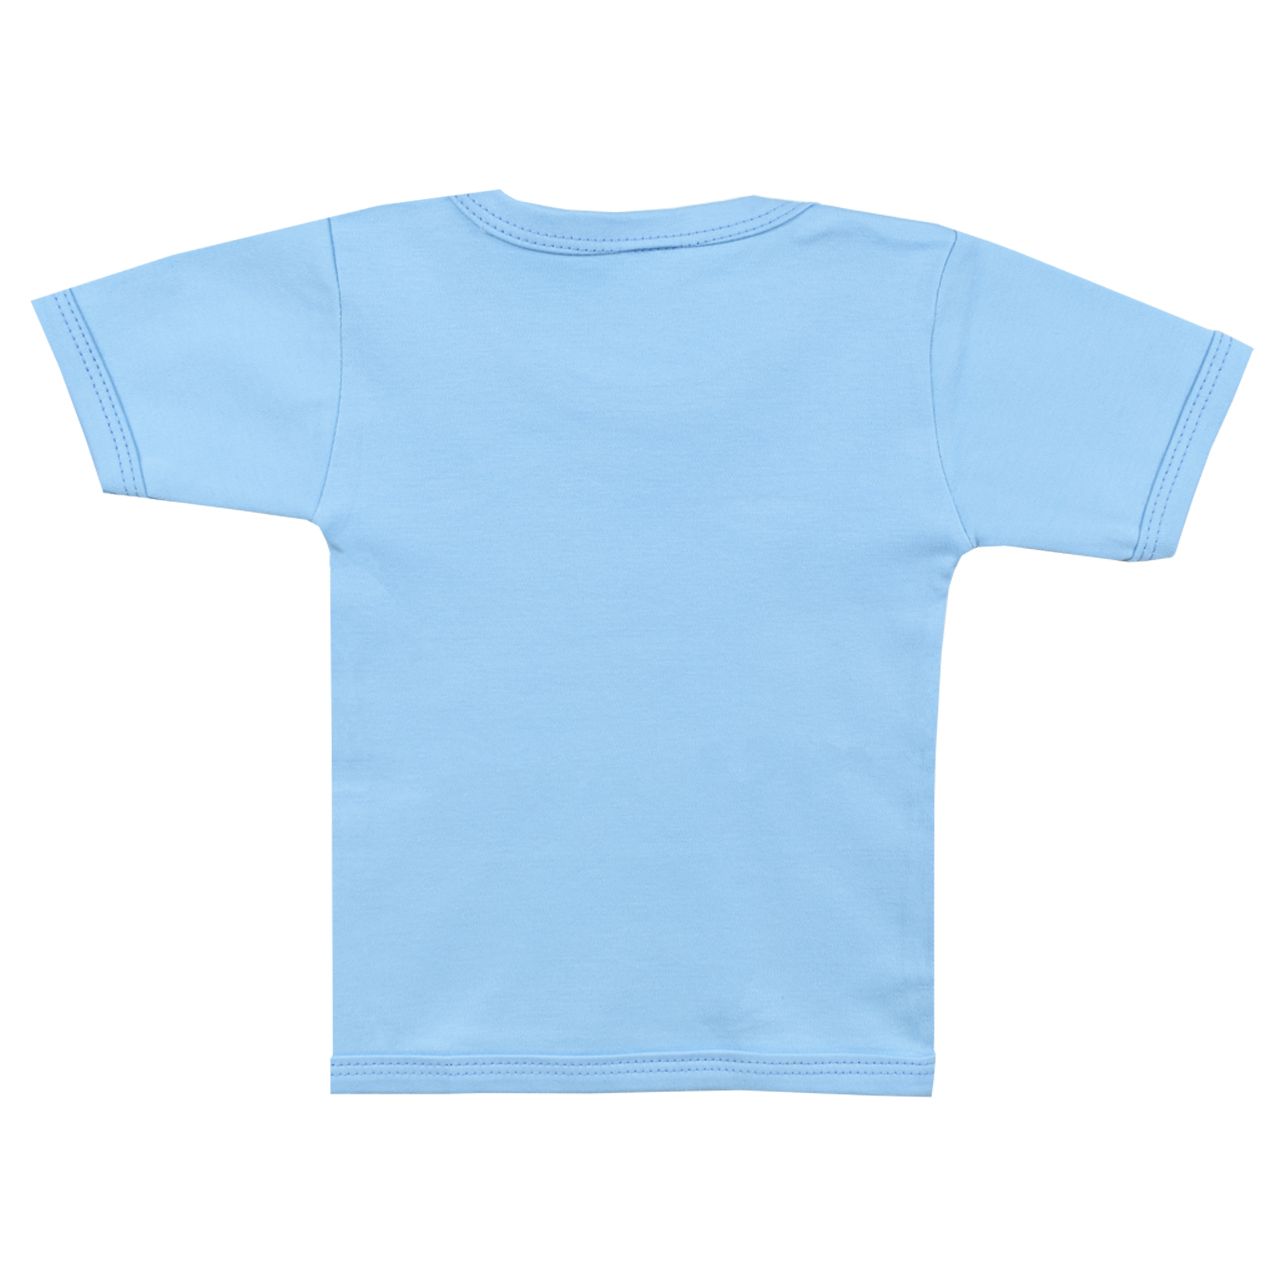 تی شرت آستین کوتاه نوزادی اسپیکو کد 301 -1 -  - 5